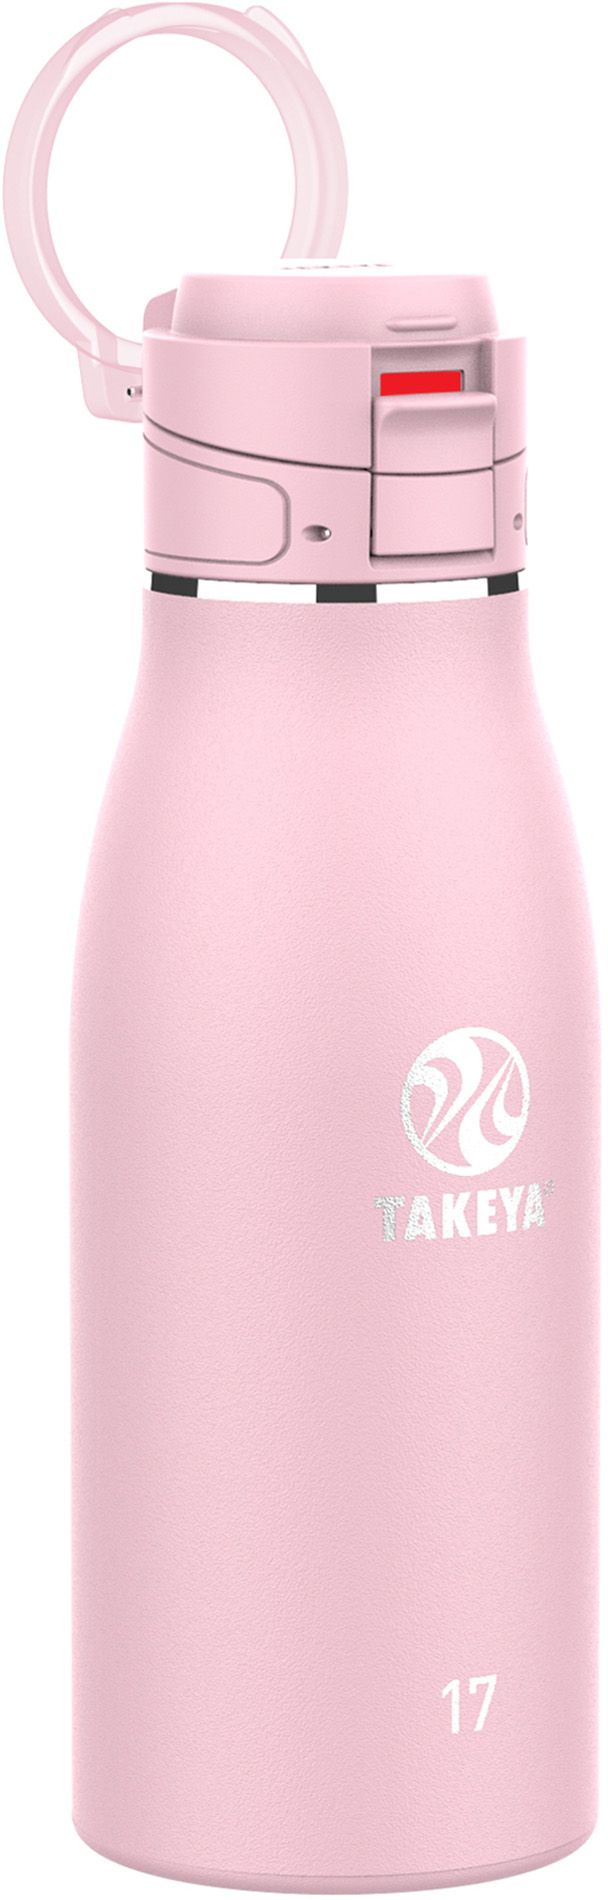 Takeya Traveler Insulated Leak-Proof Mug with FlipLock Lid